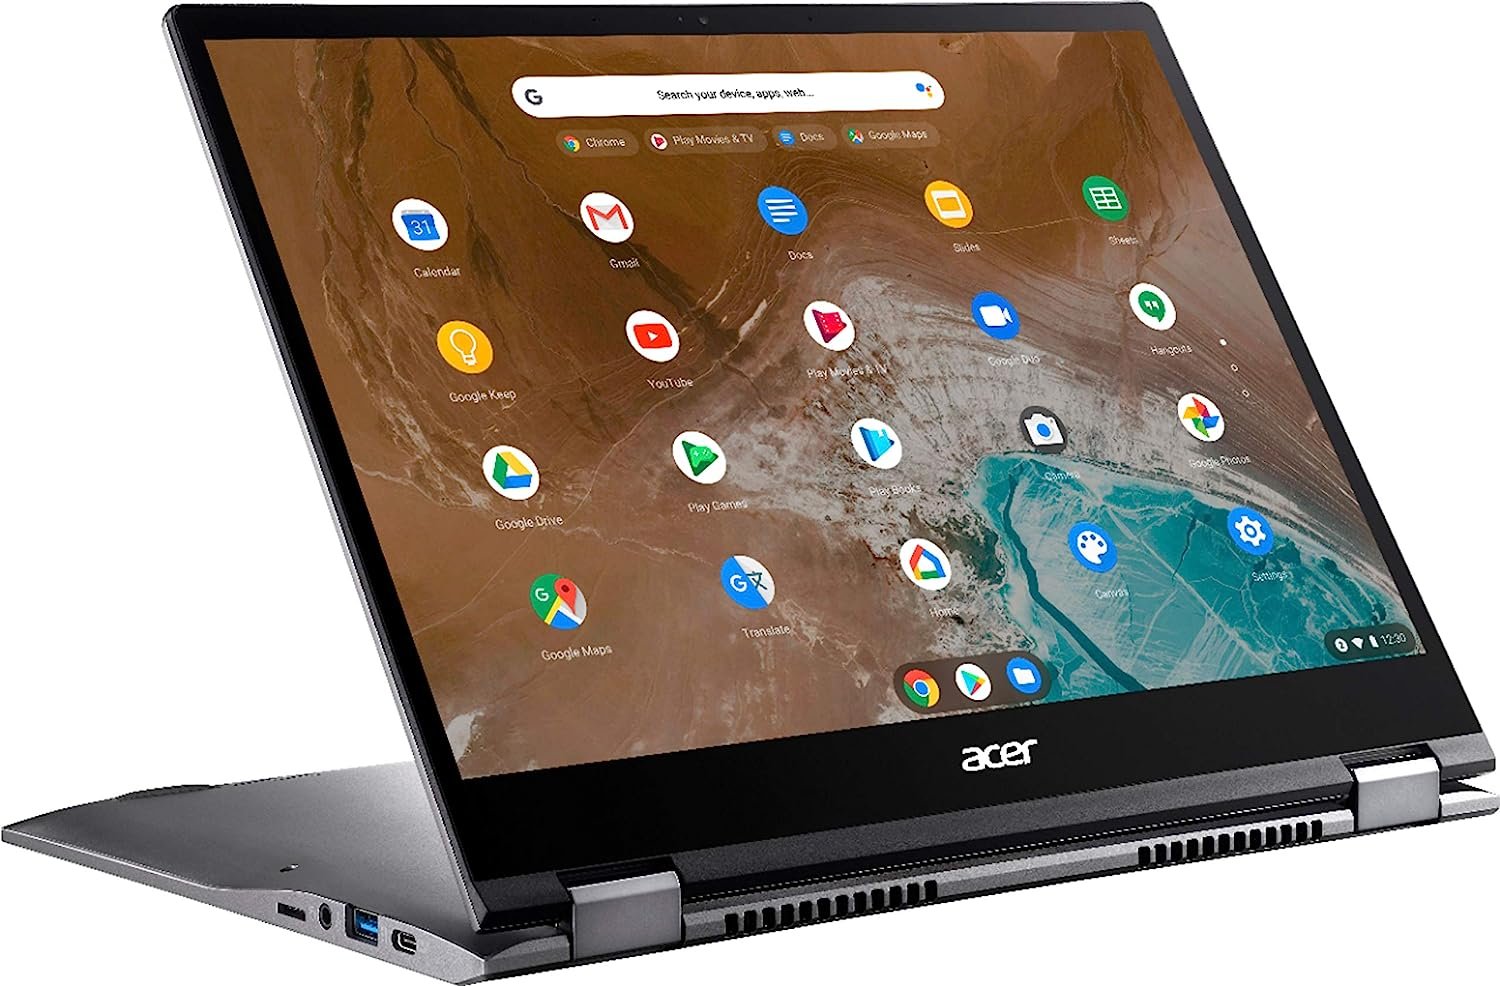 Acer Chromebook Spin 713 2 in 1 best 2 in 1 laptop under 500